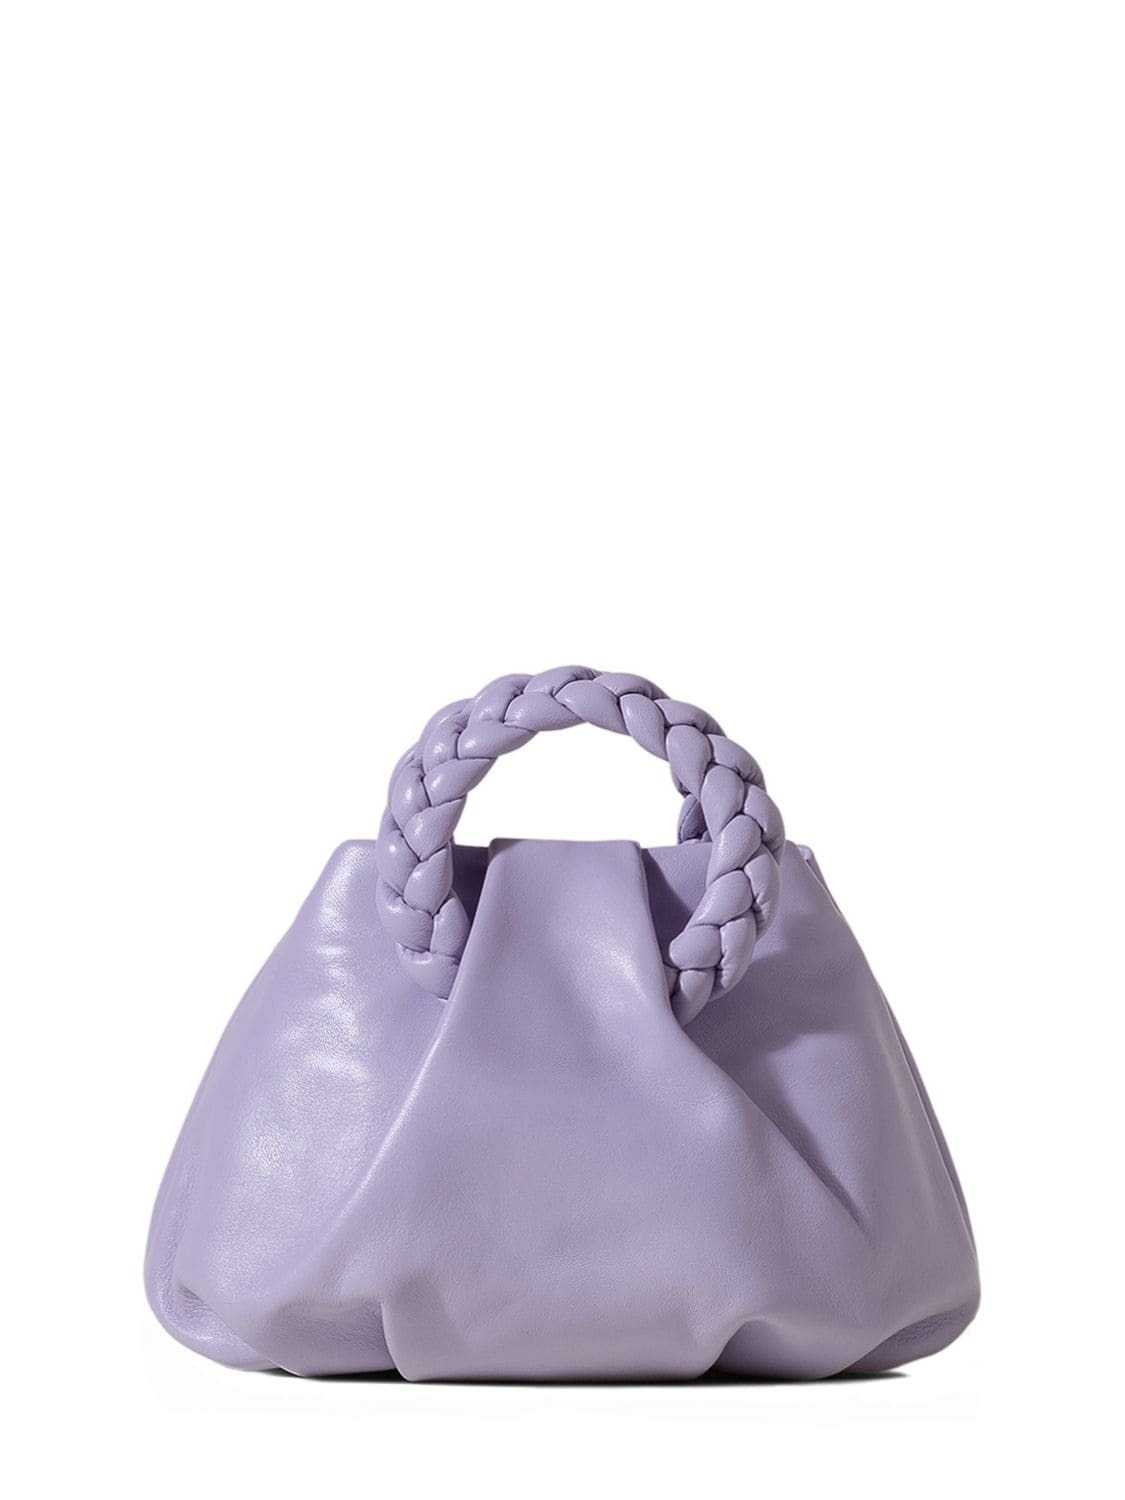 HEREU Mini Bombon Leather Top Handle Bag in lavender